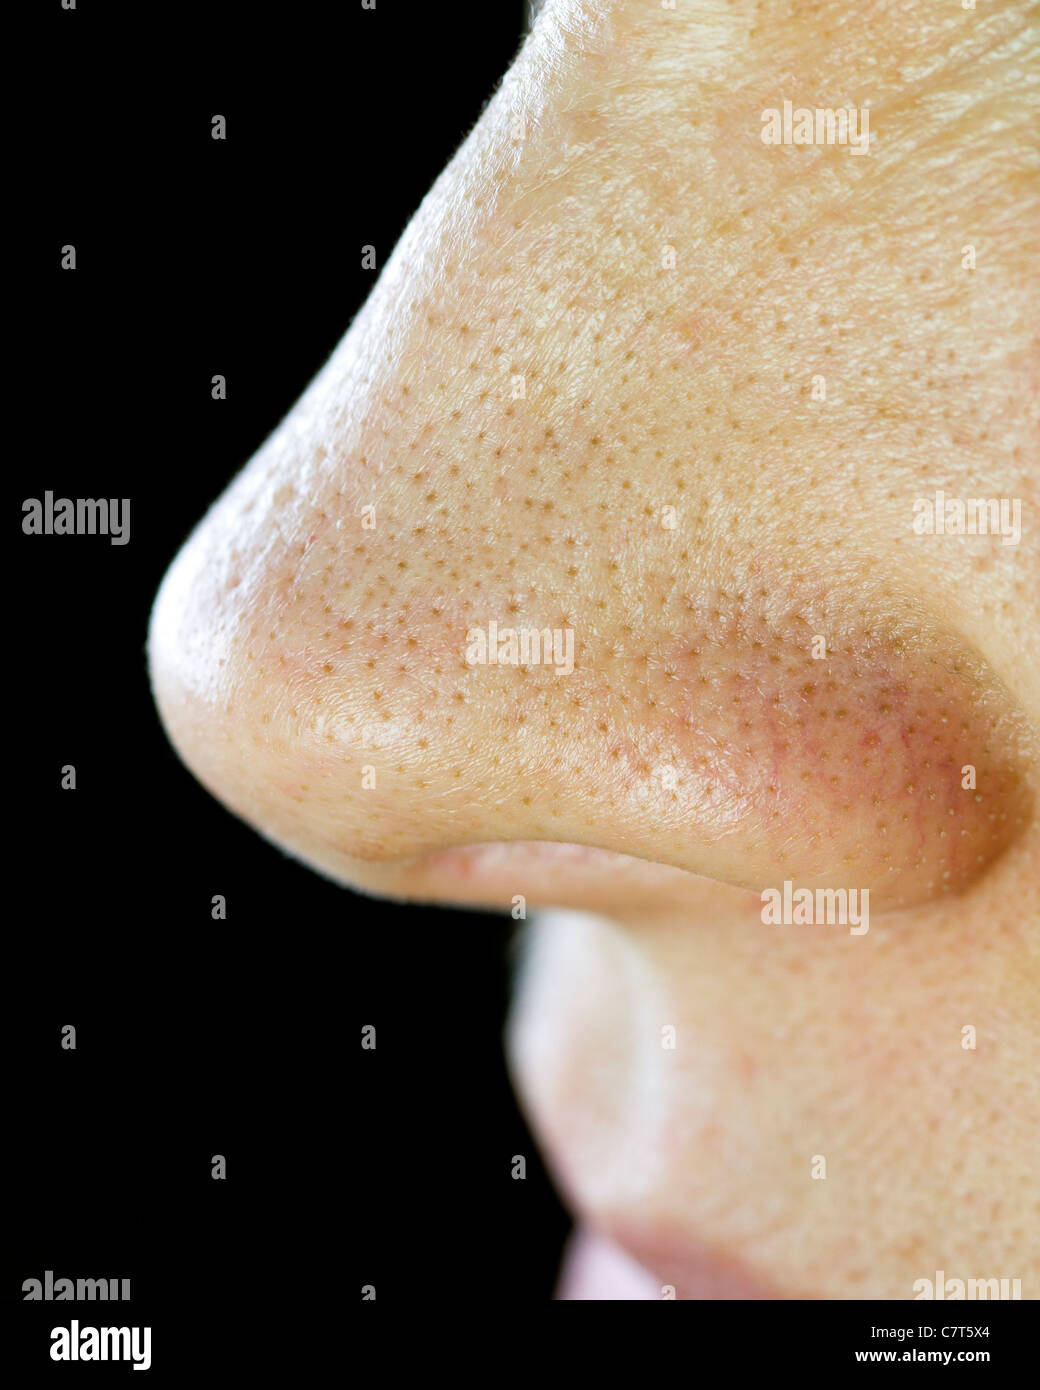 Nose with blackheads. Macro lens. Stock Photo